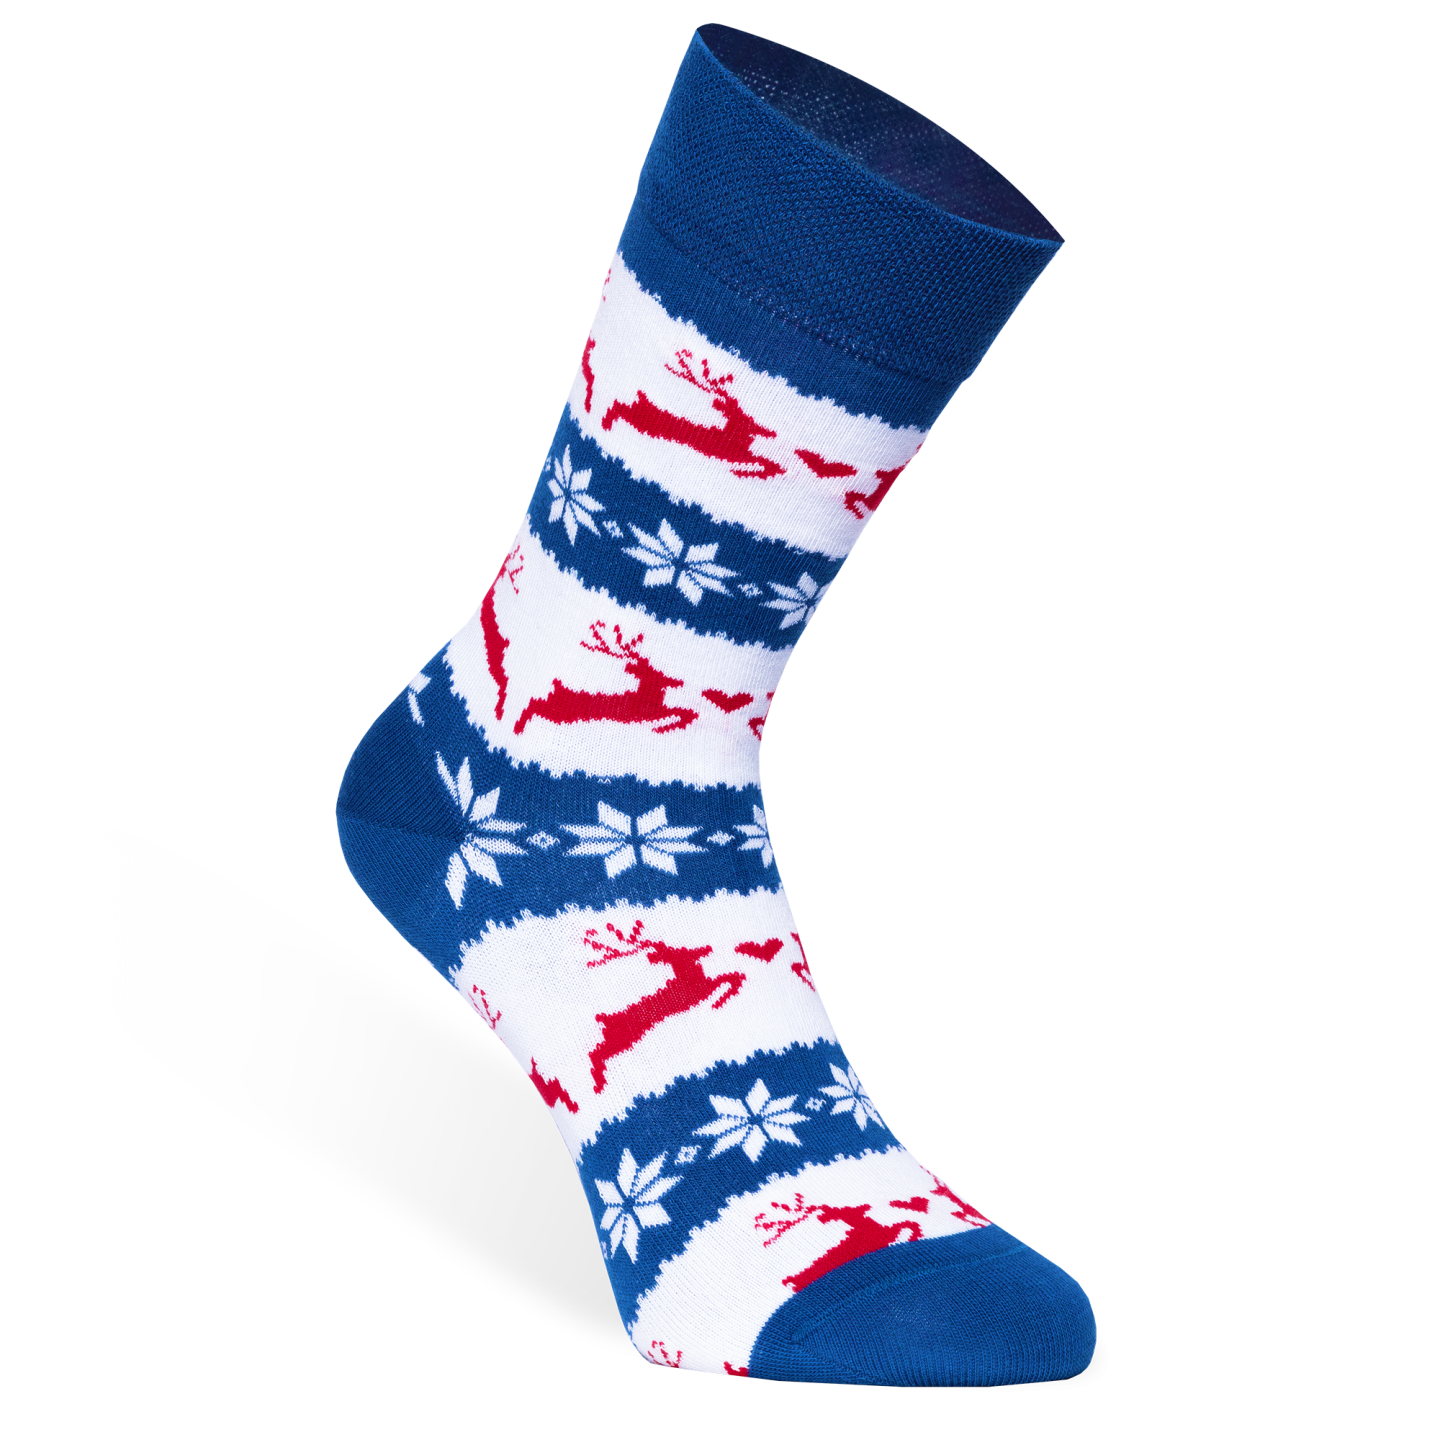 E-shop Slippsy Nordic socks/36-40